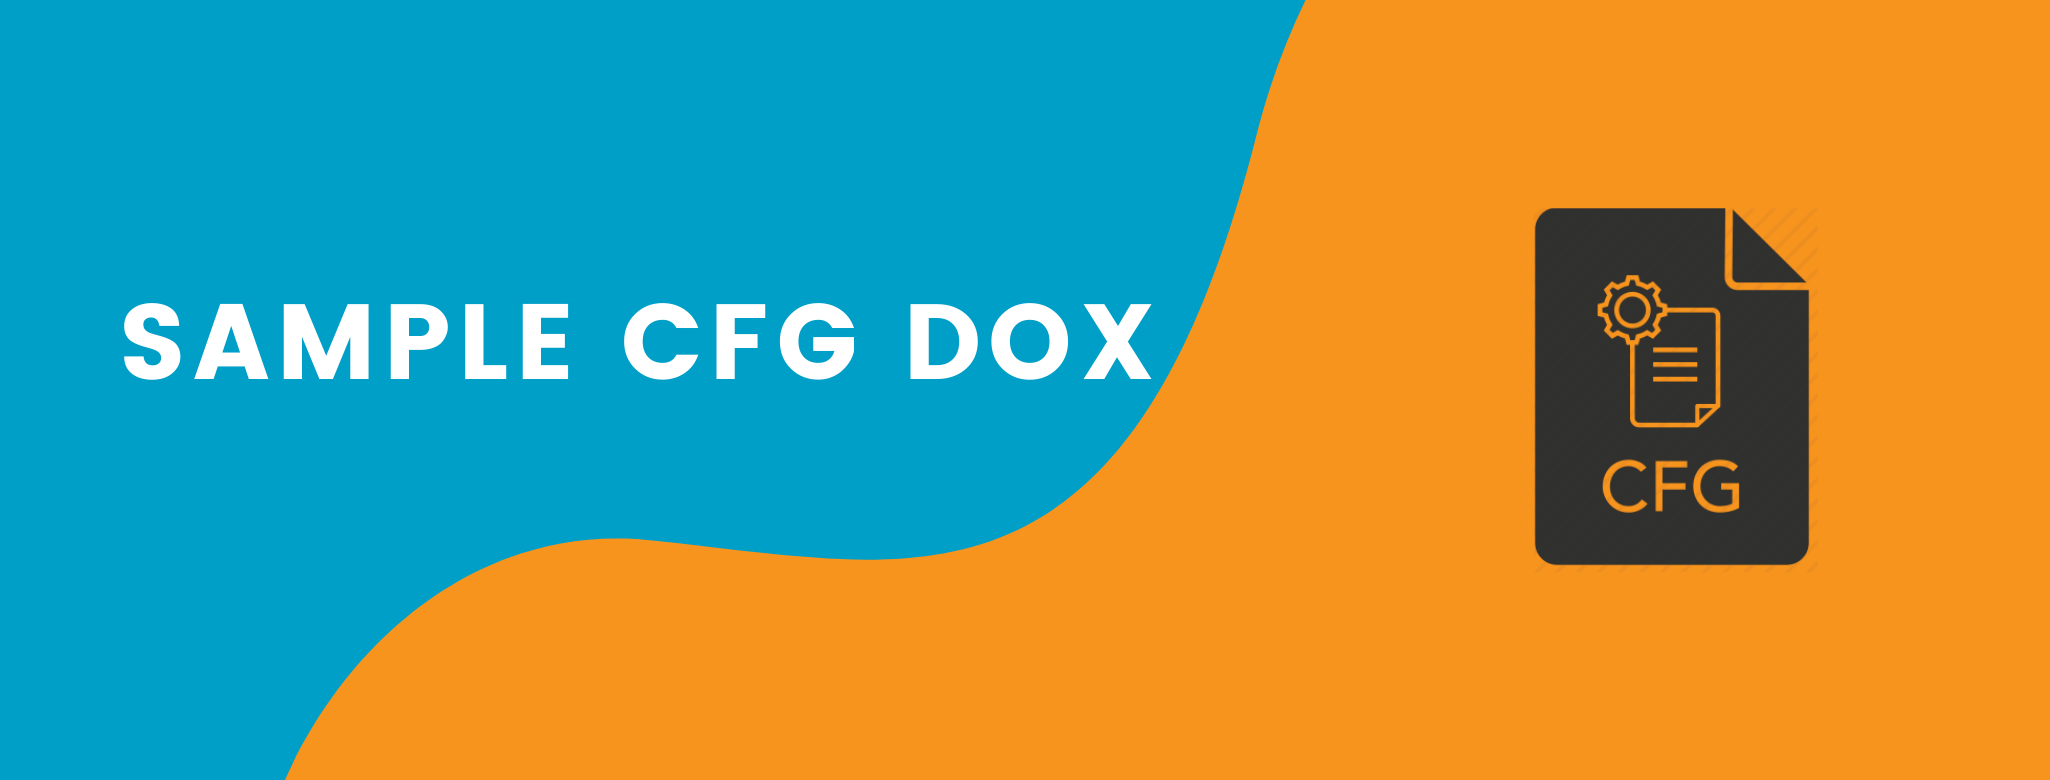 Sample CFG dox